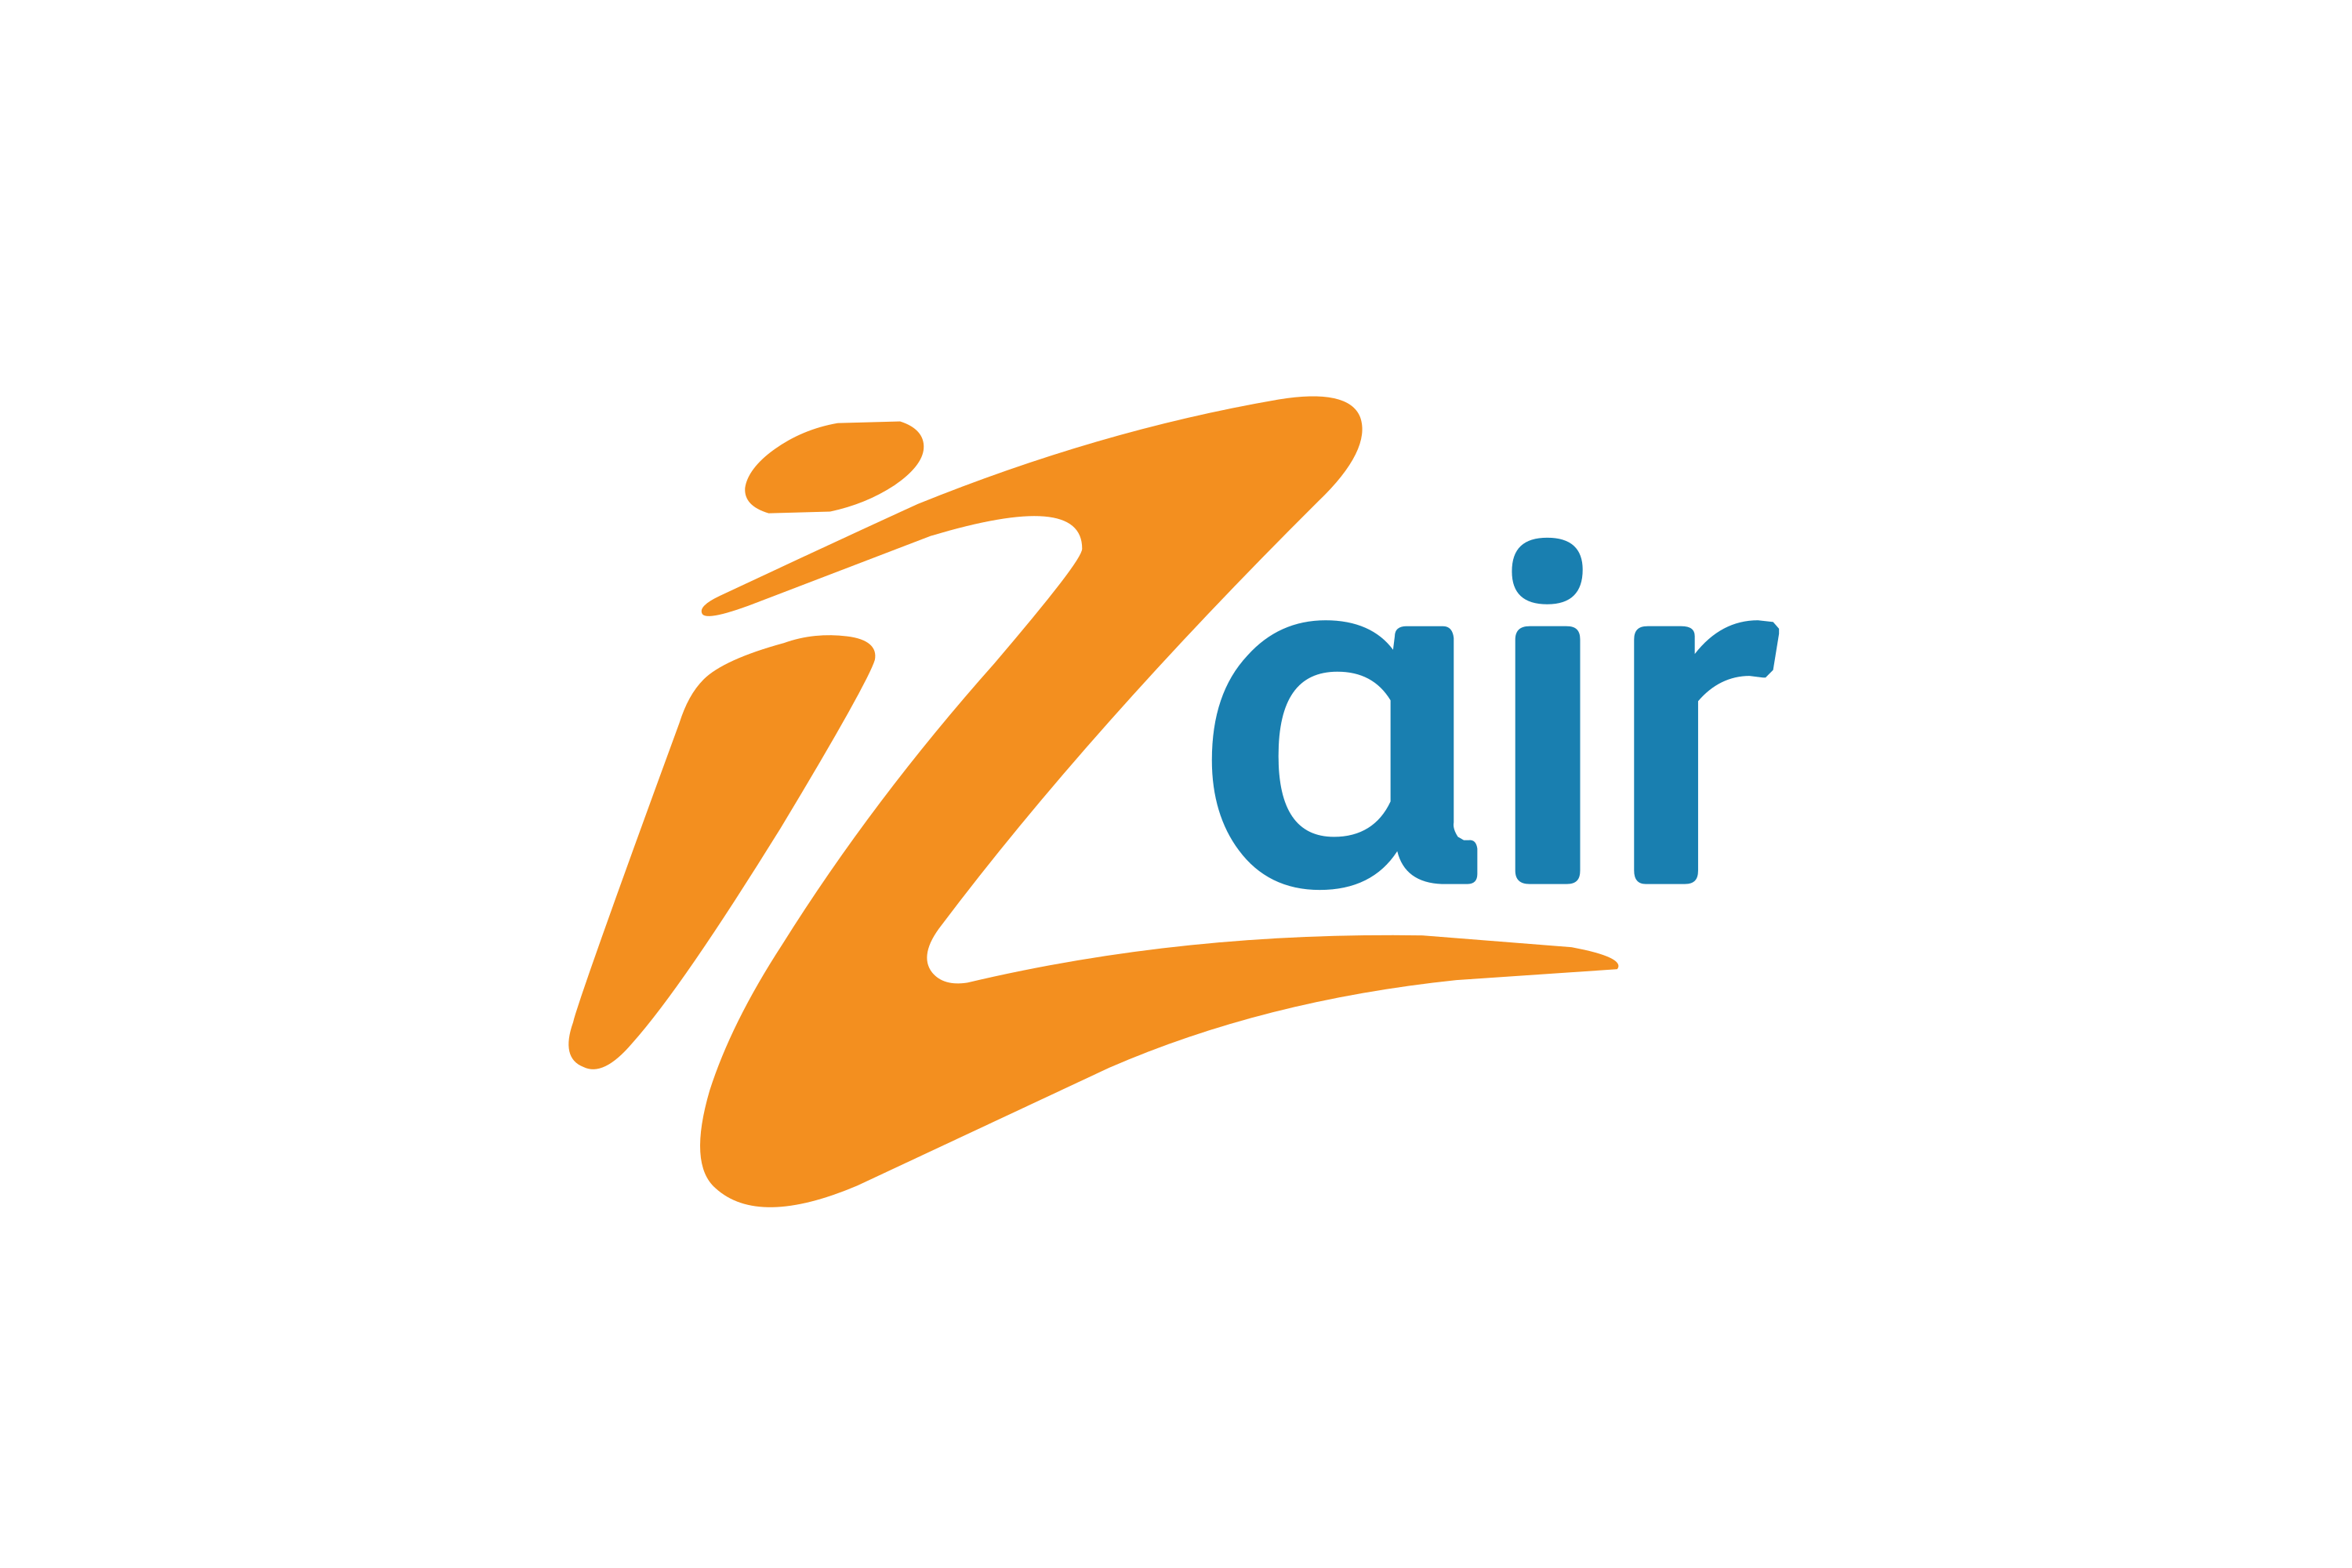 IZair Logo